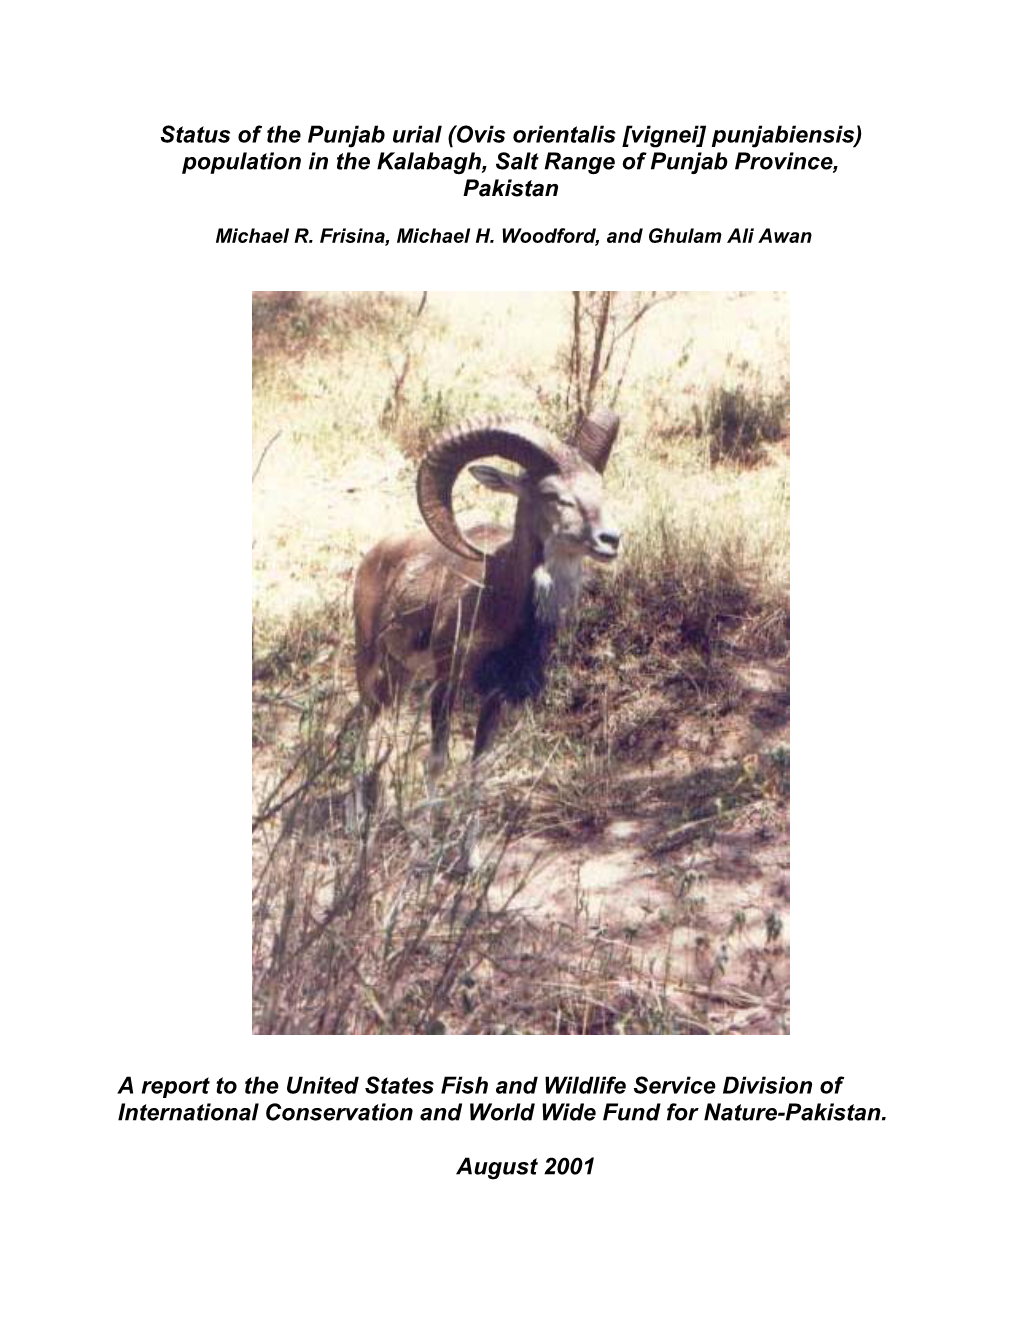 Status of the Kalabagh Urial (Ovis Orientalis Punjabiensis) Population